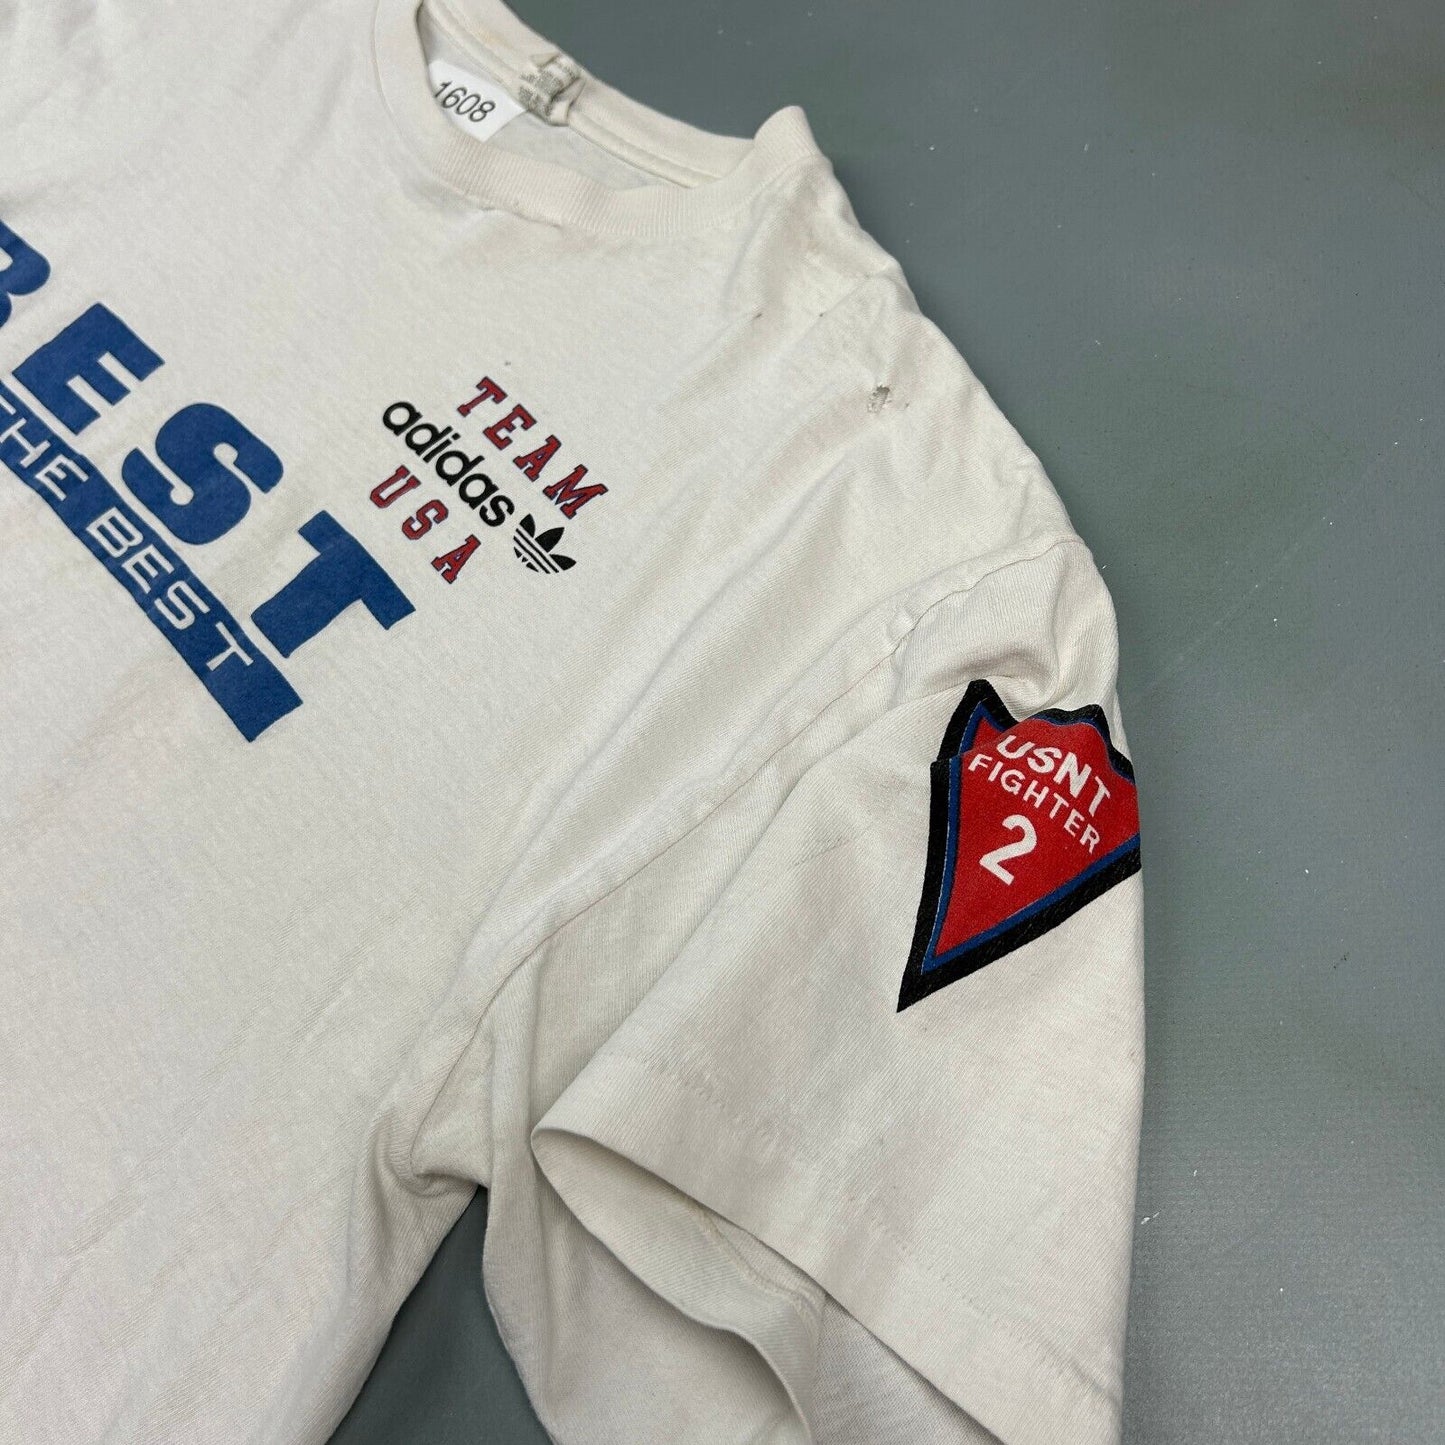 VINTAGE 80s | ADIDAS Team USA Martial Art White T-Shirt sz L Adult